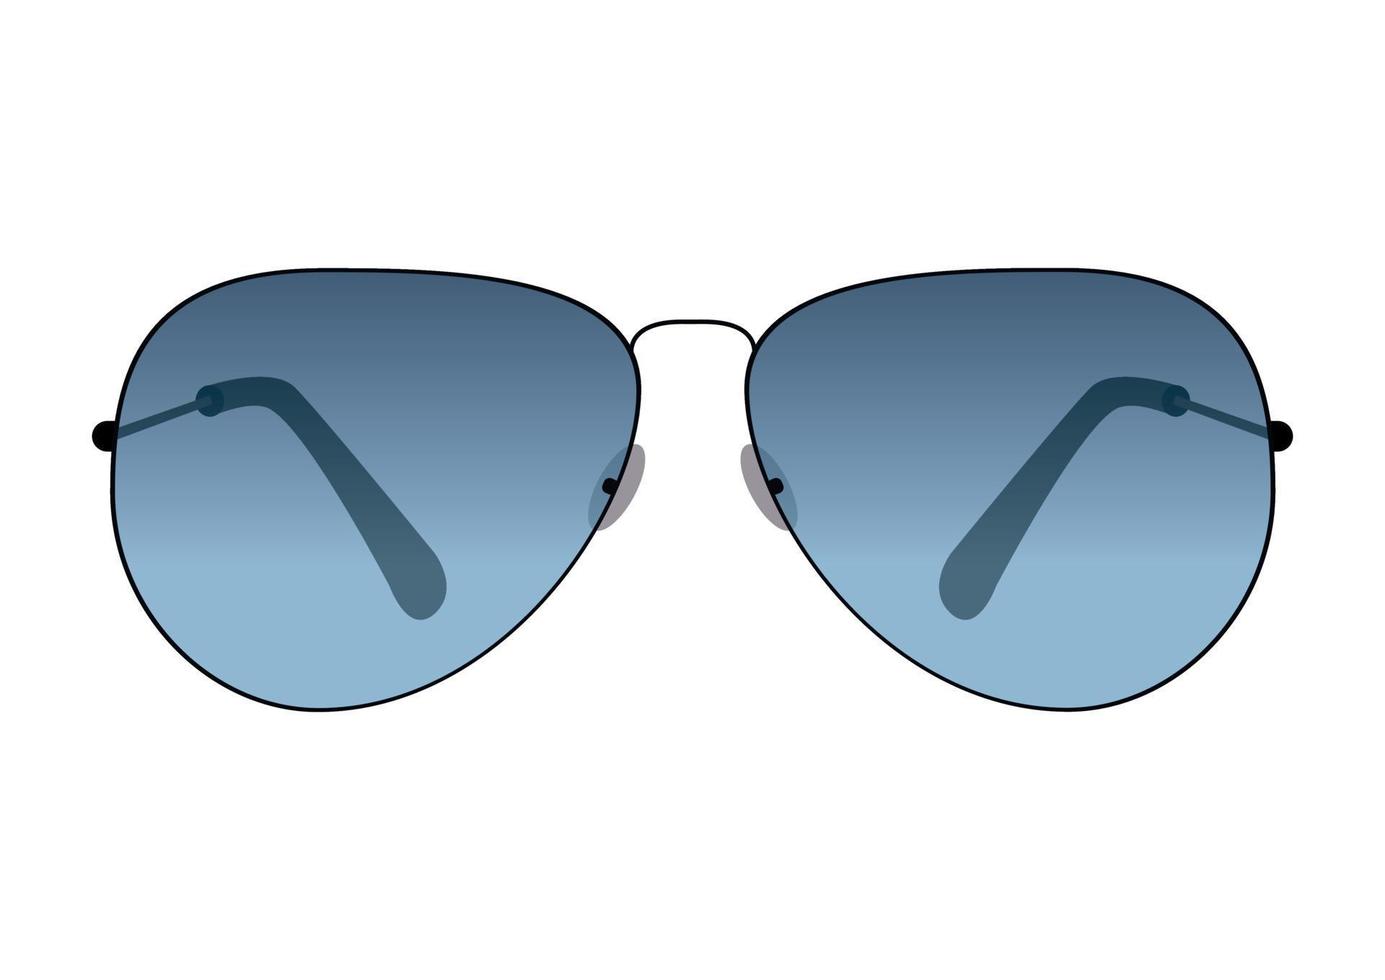 Sunglasses. Blue lens sunglasses isolated on white background vector